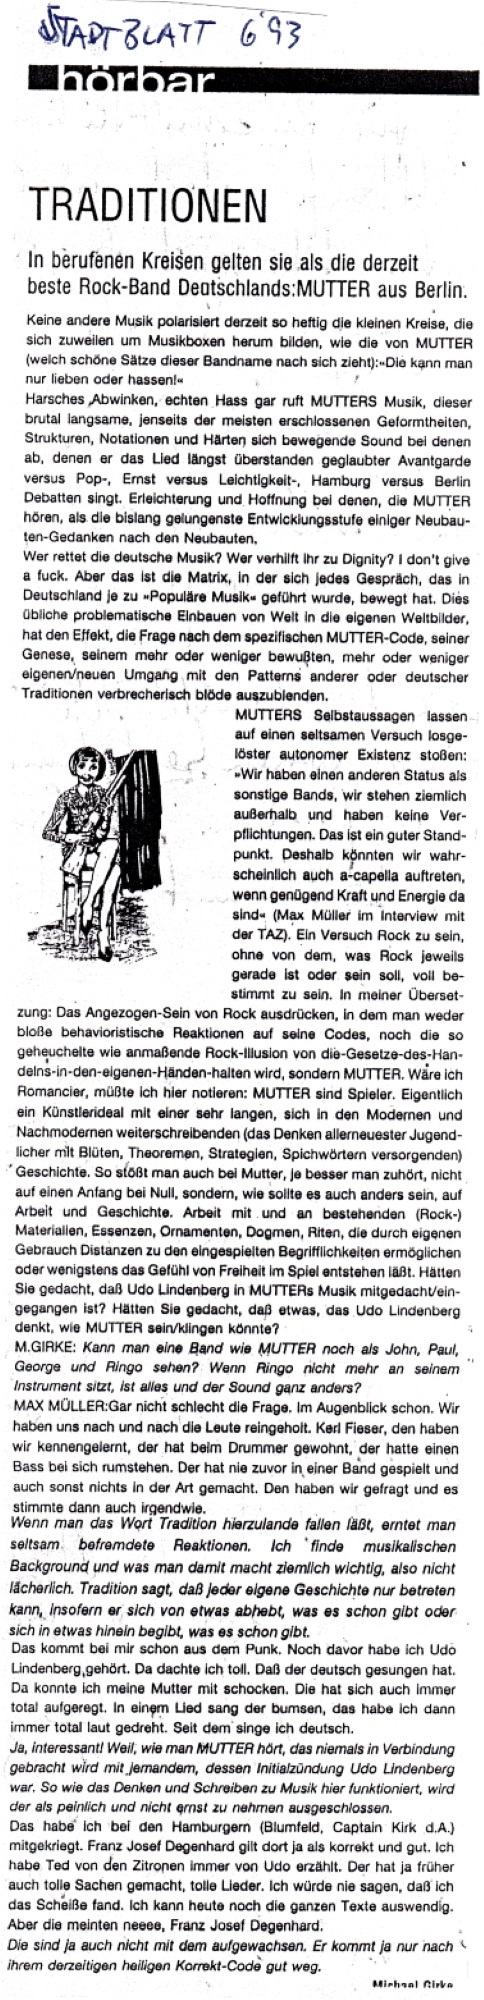 17-Stadtblatt-6.93-HH